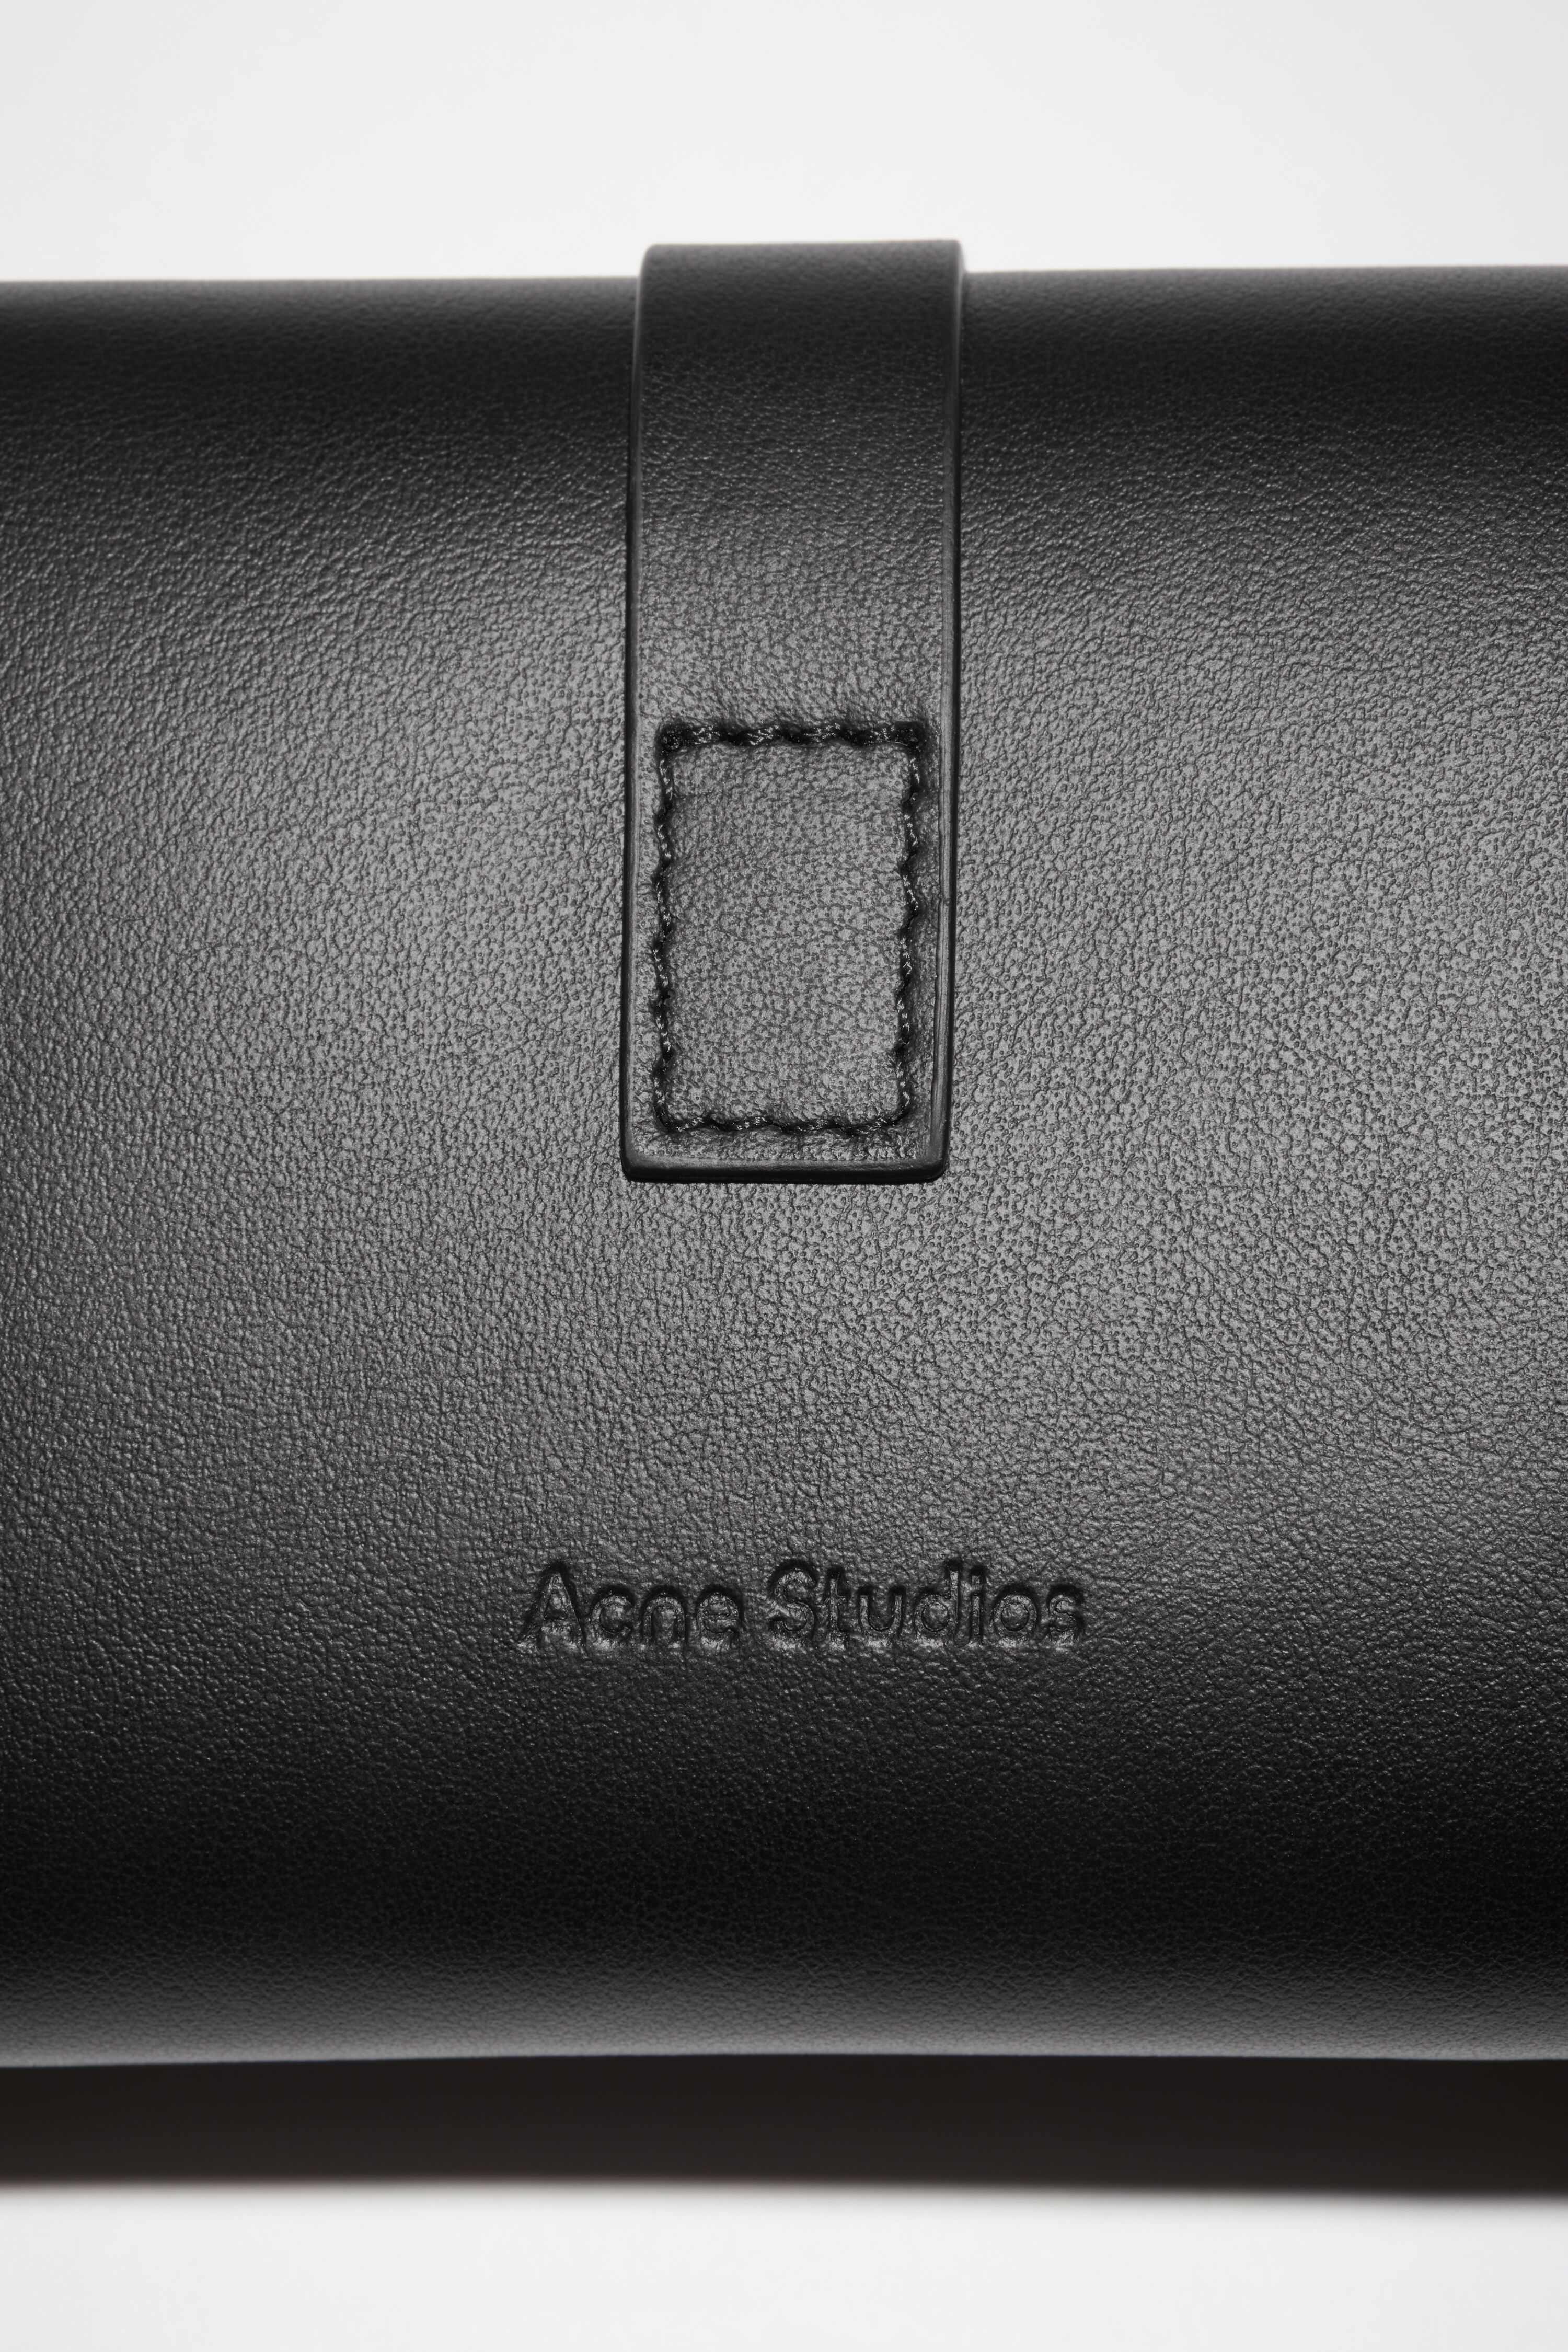 Acne Studios（アクネ ストゥディオズ）の財布